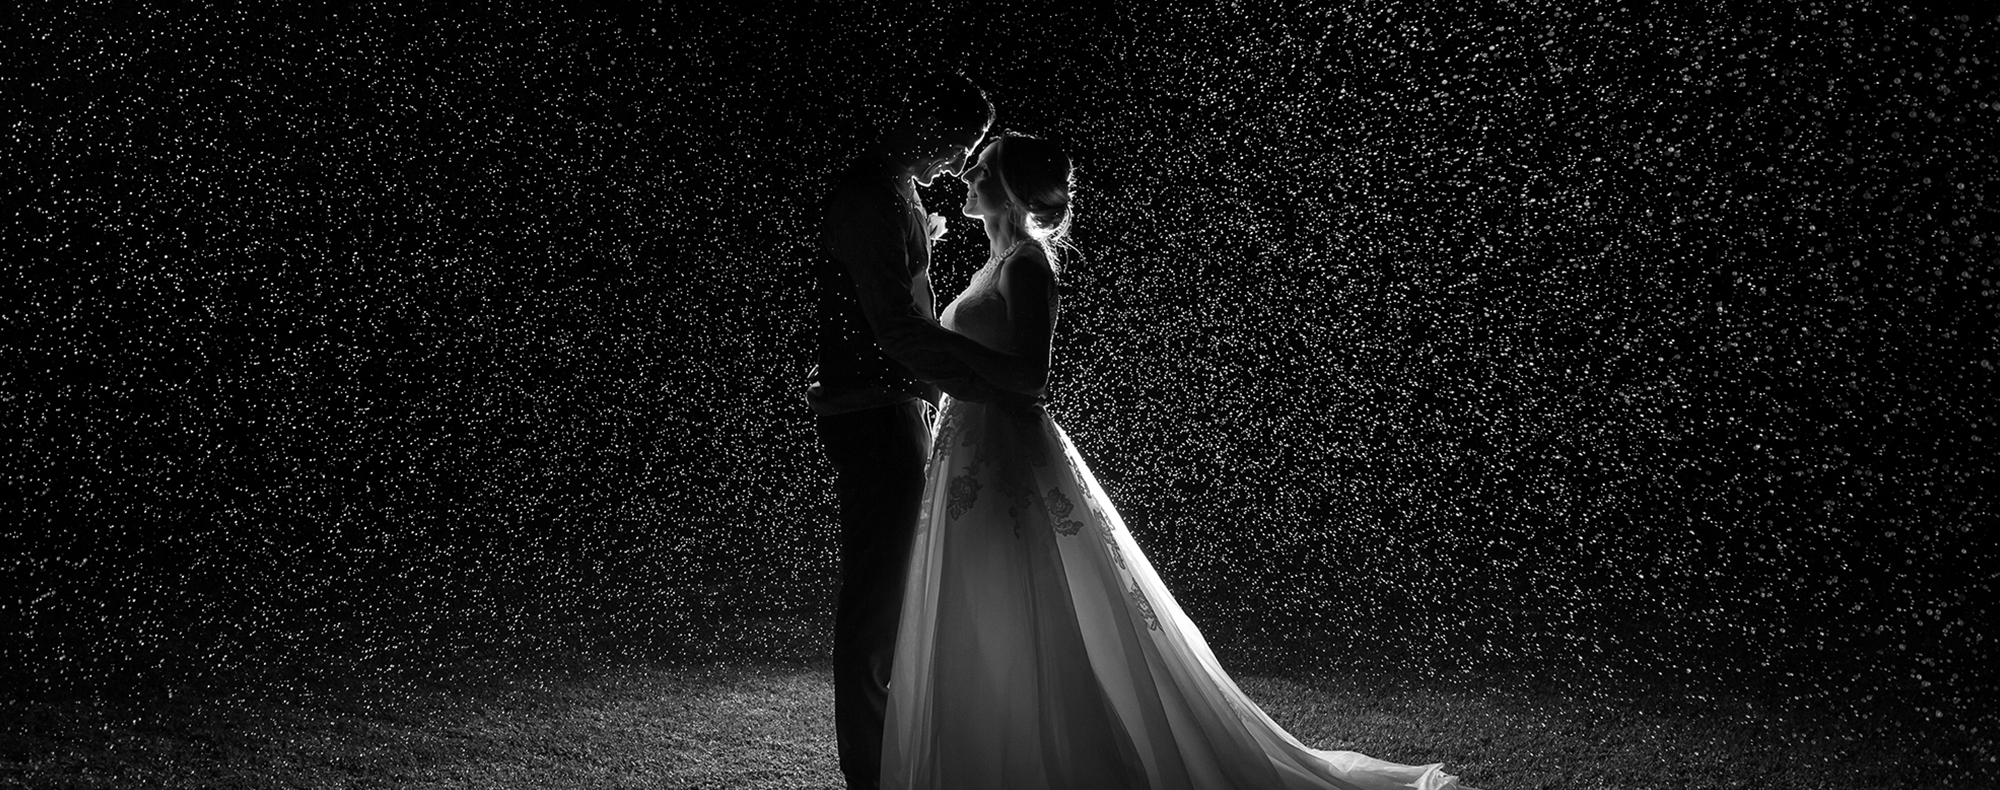 Bride & Groom Rain Wedding Photo